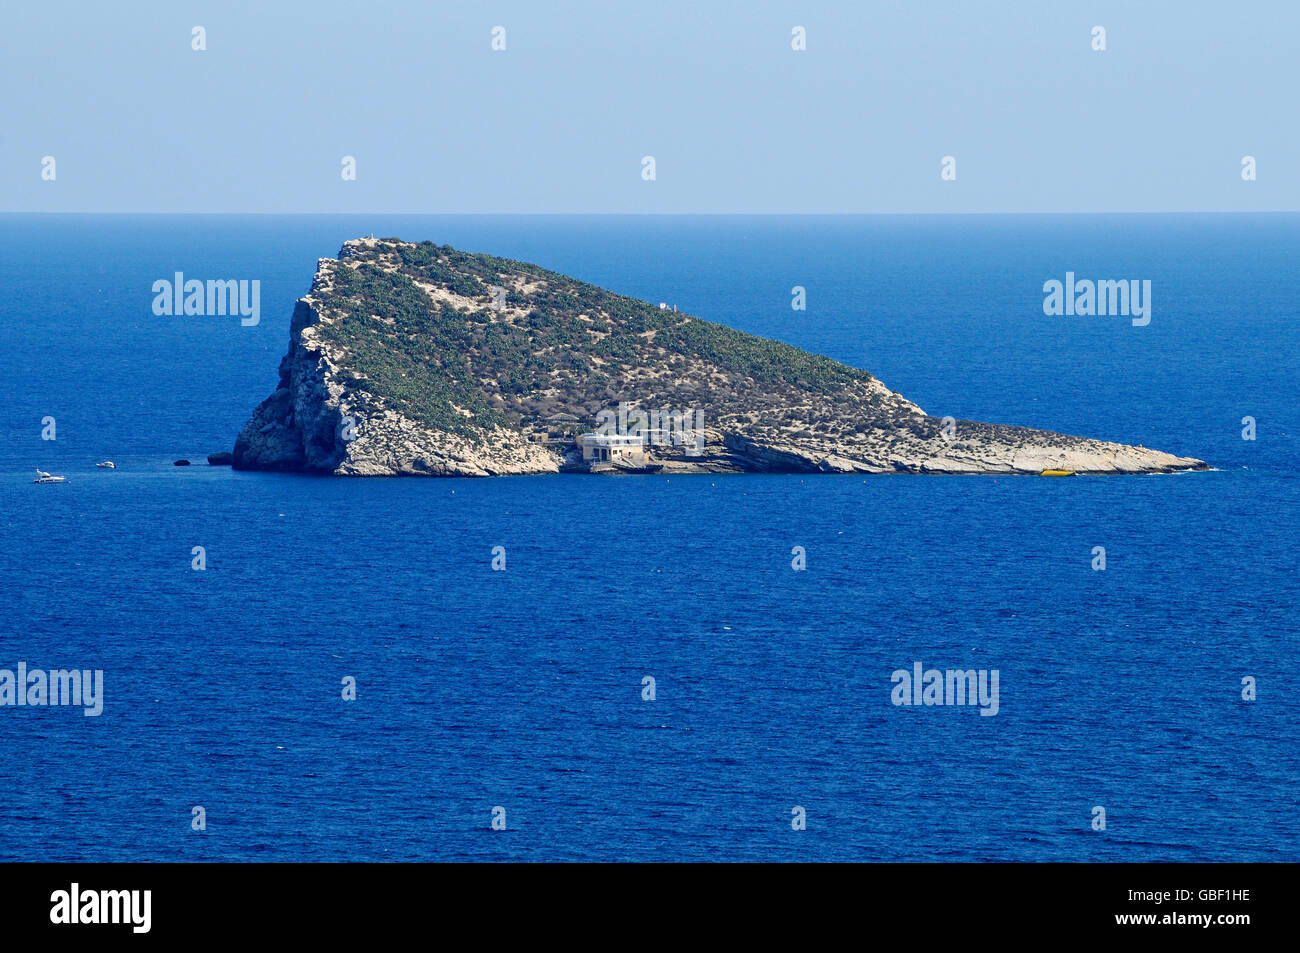 Isla de Benidorm, small offshore island, Benidorm, Province of Alicante, Spain, Europe Stock Photo